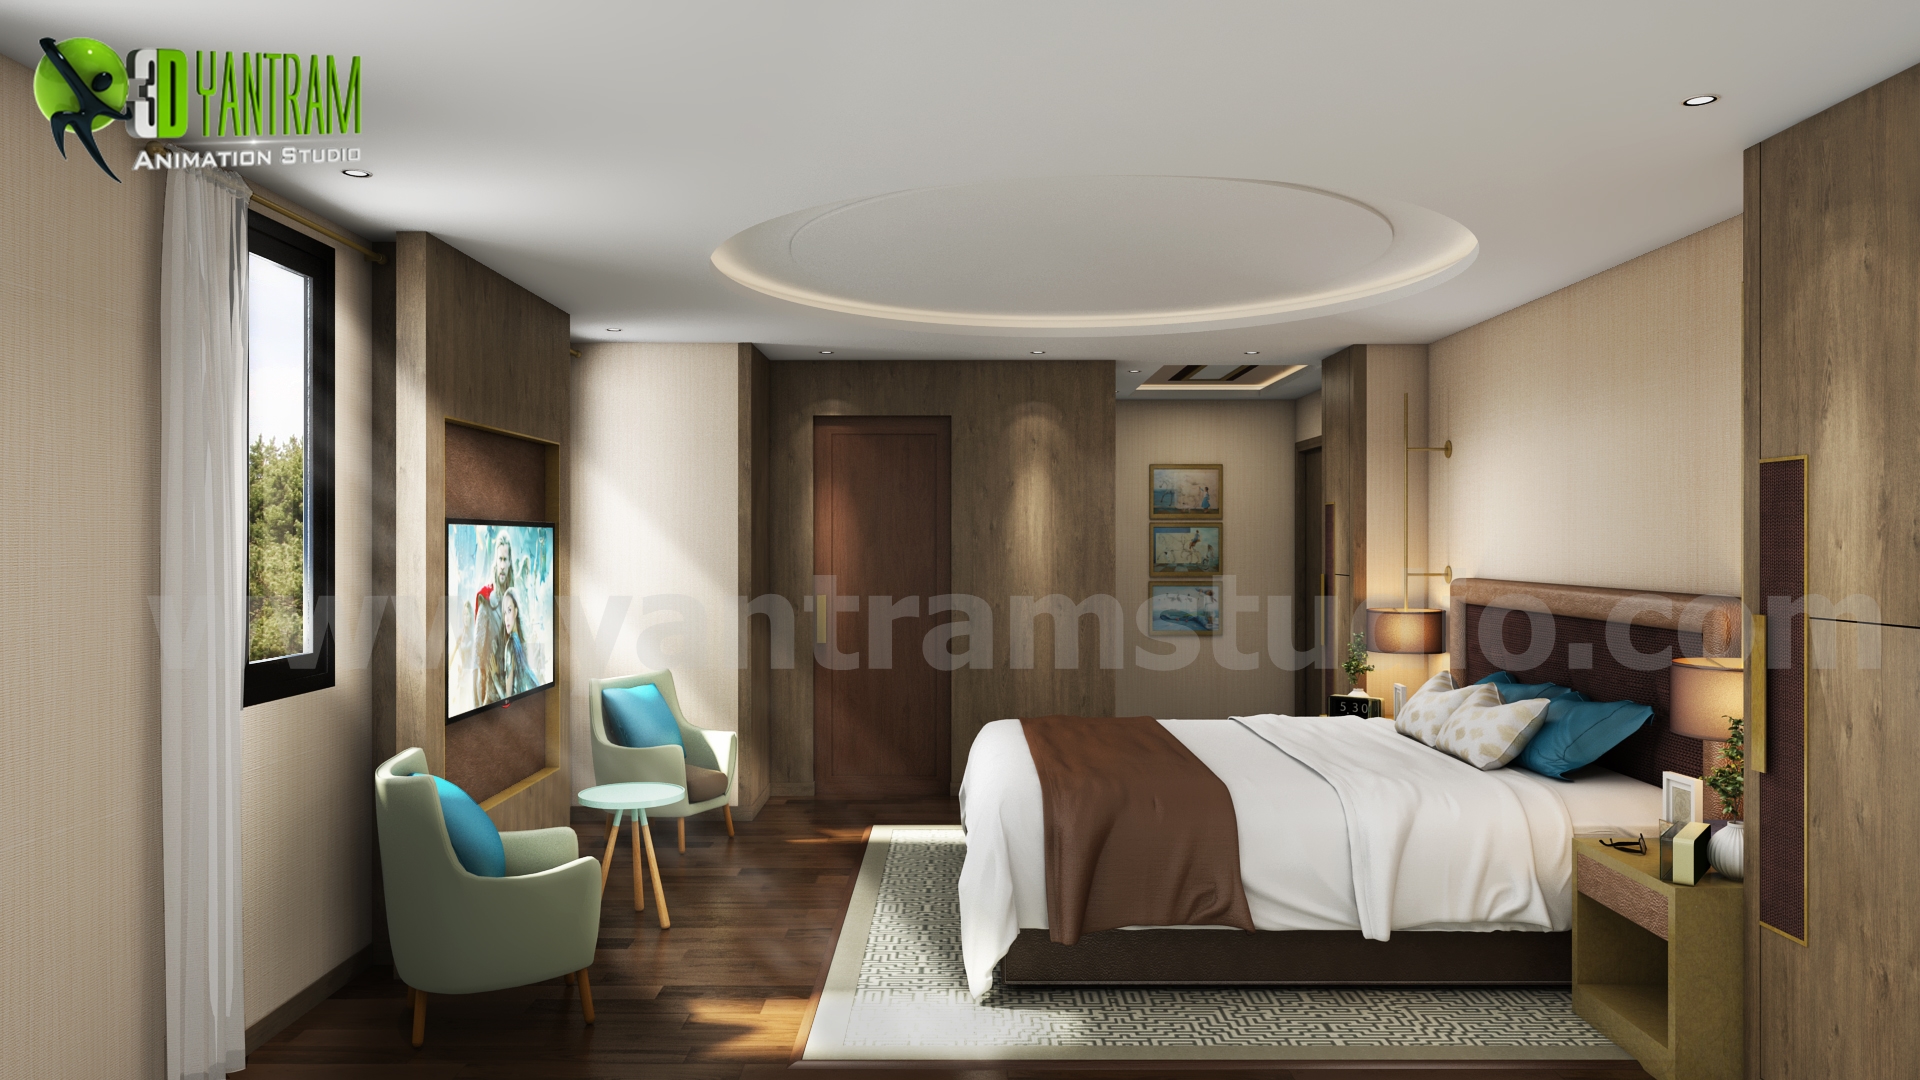 Interior Bedroom Design with home renovation concept by Yantram 3D  interior design firm for home – Paris, France